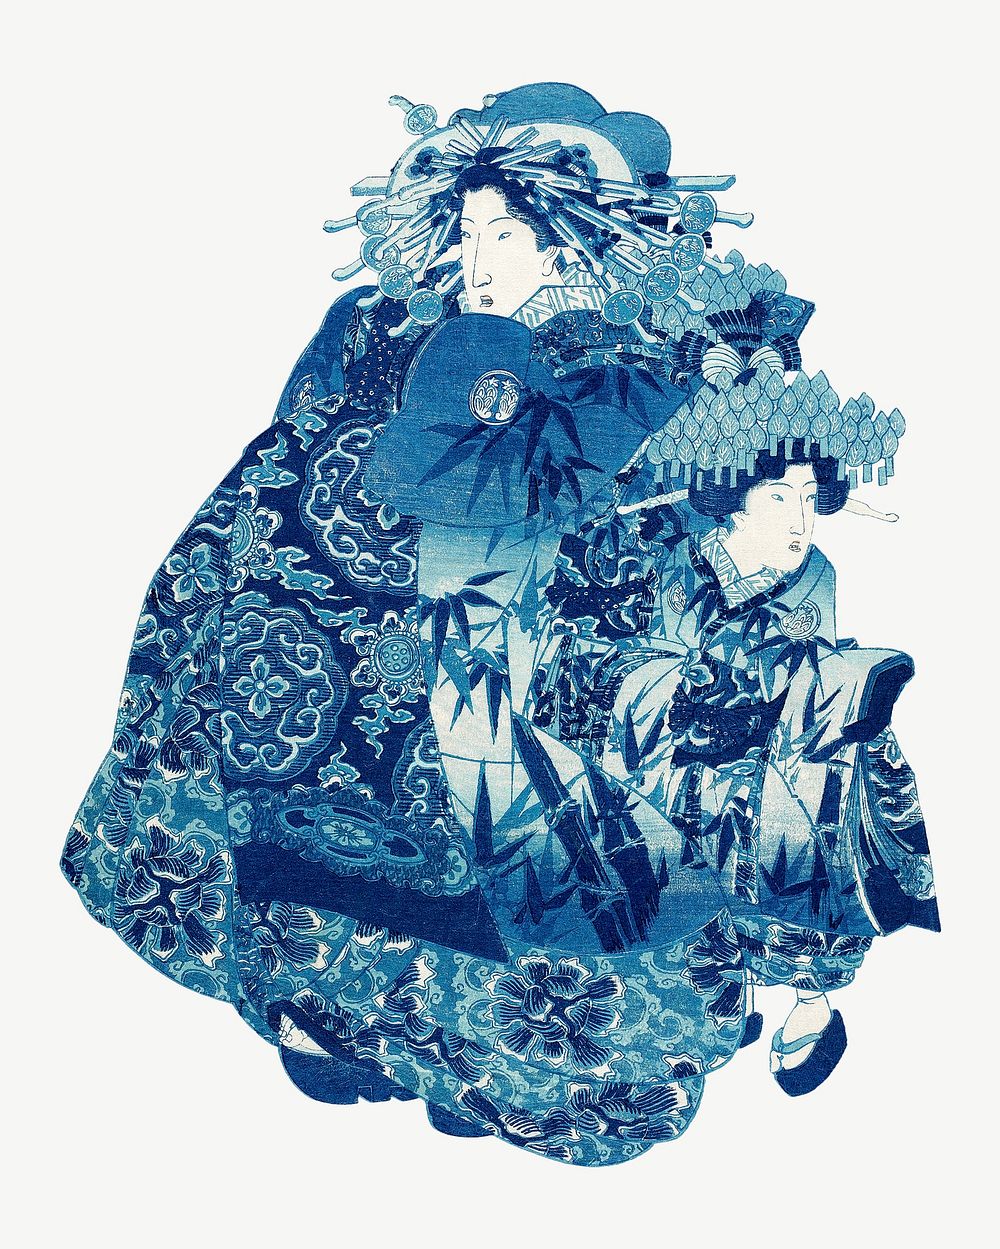 Blue Japanese woman, vintage illustration by Utagawa Kunisada psd. Remixed by rawpixel.